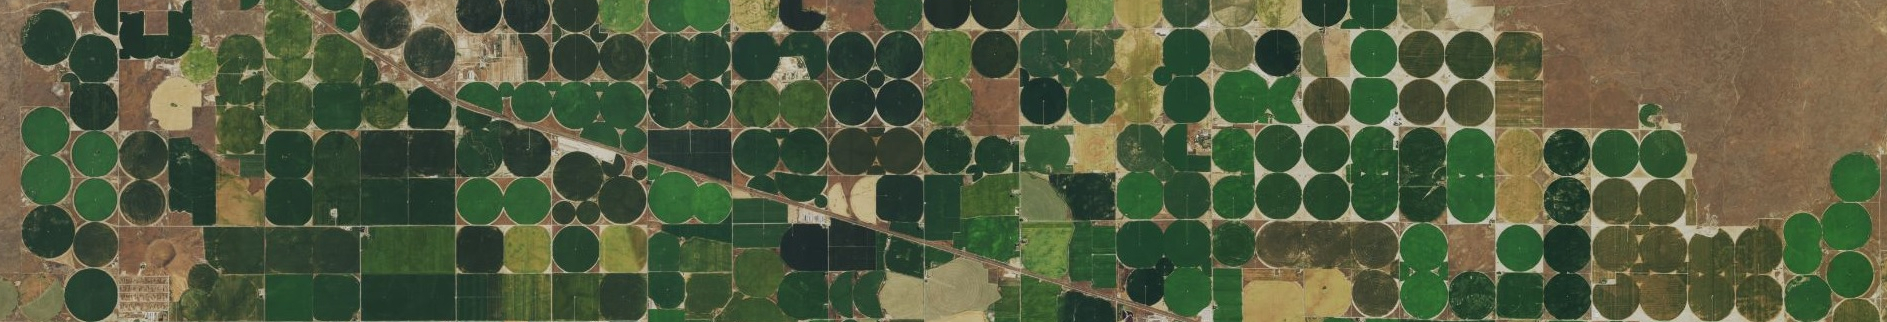 Aerial view of pivot irrigated farmland